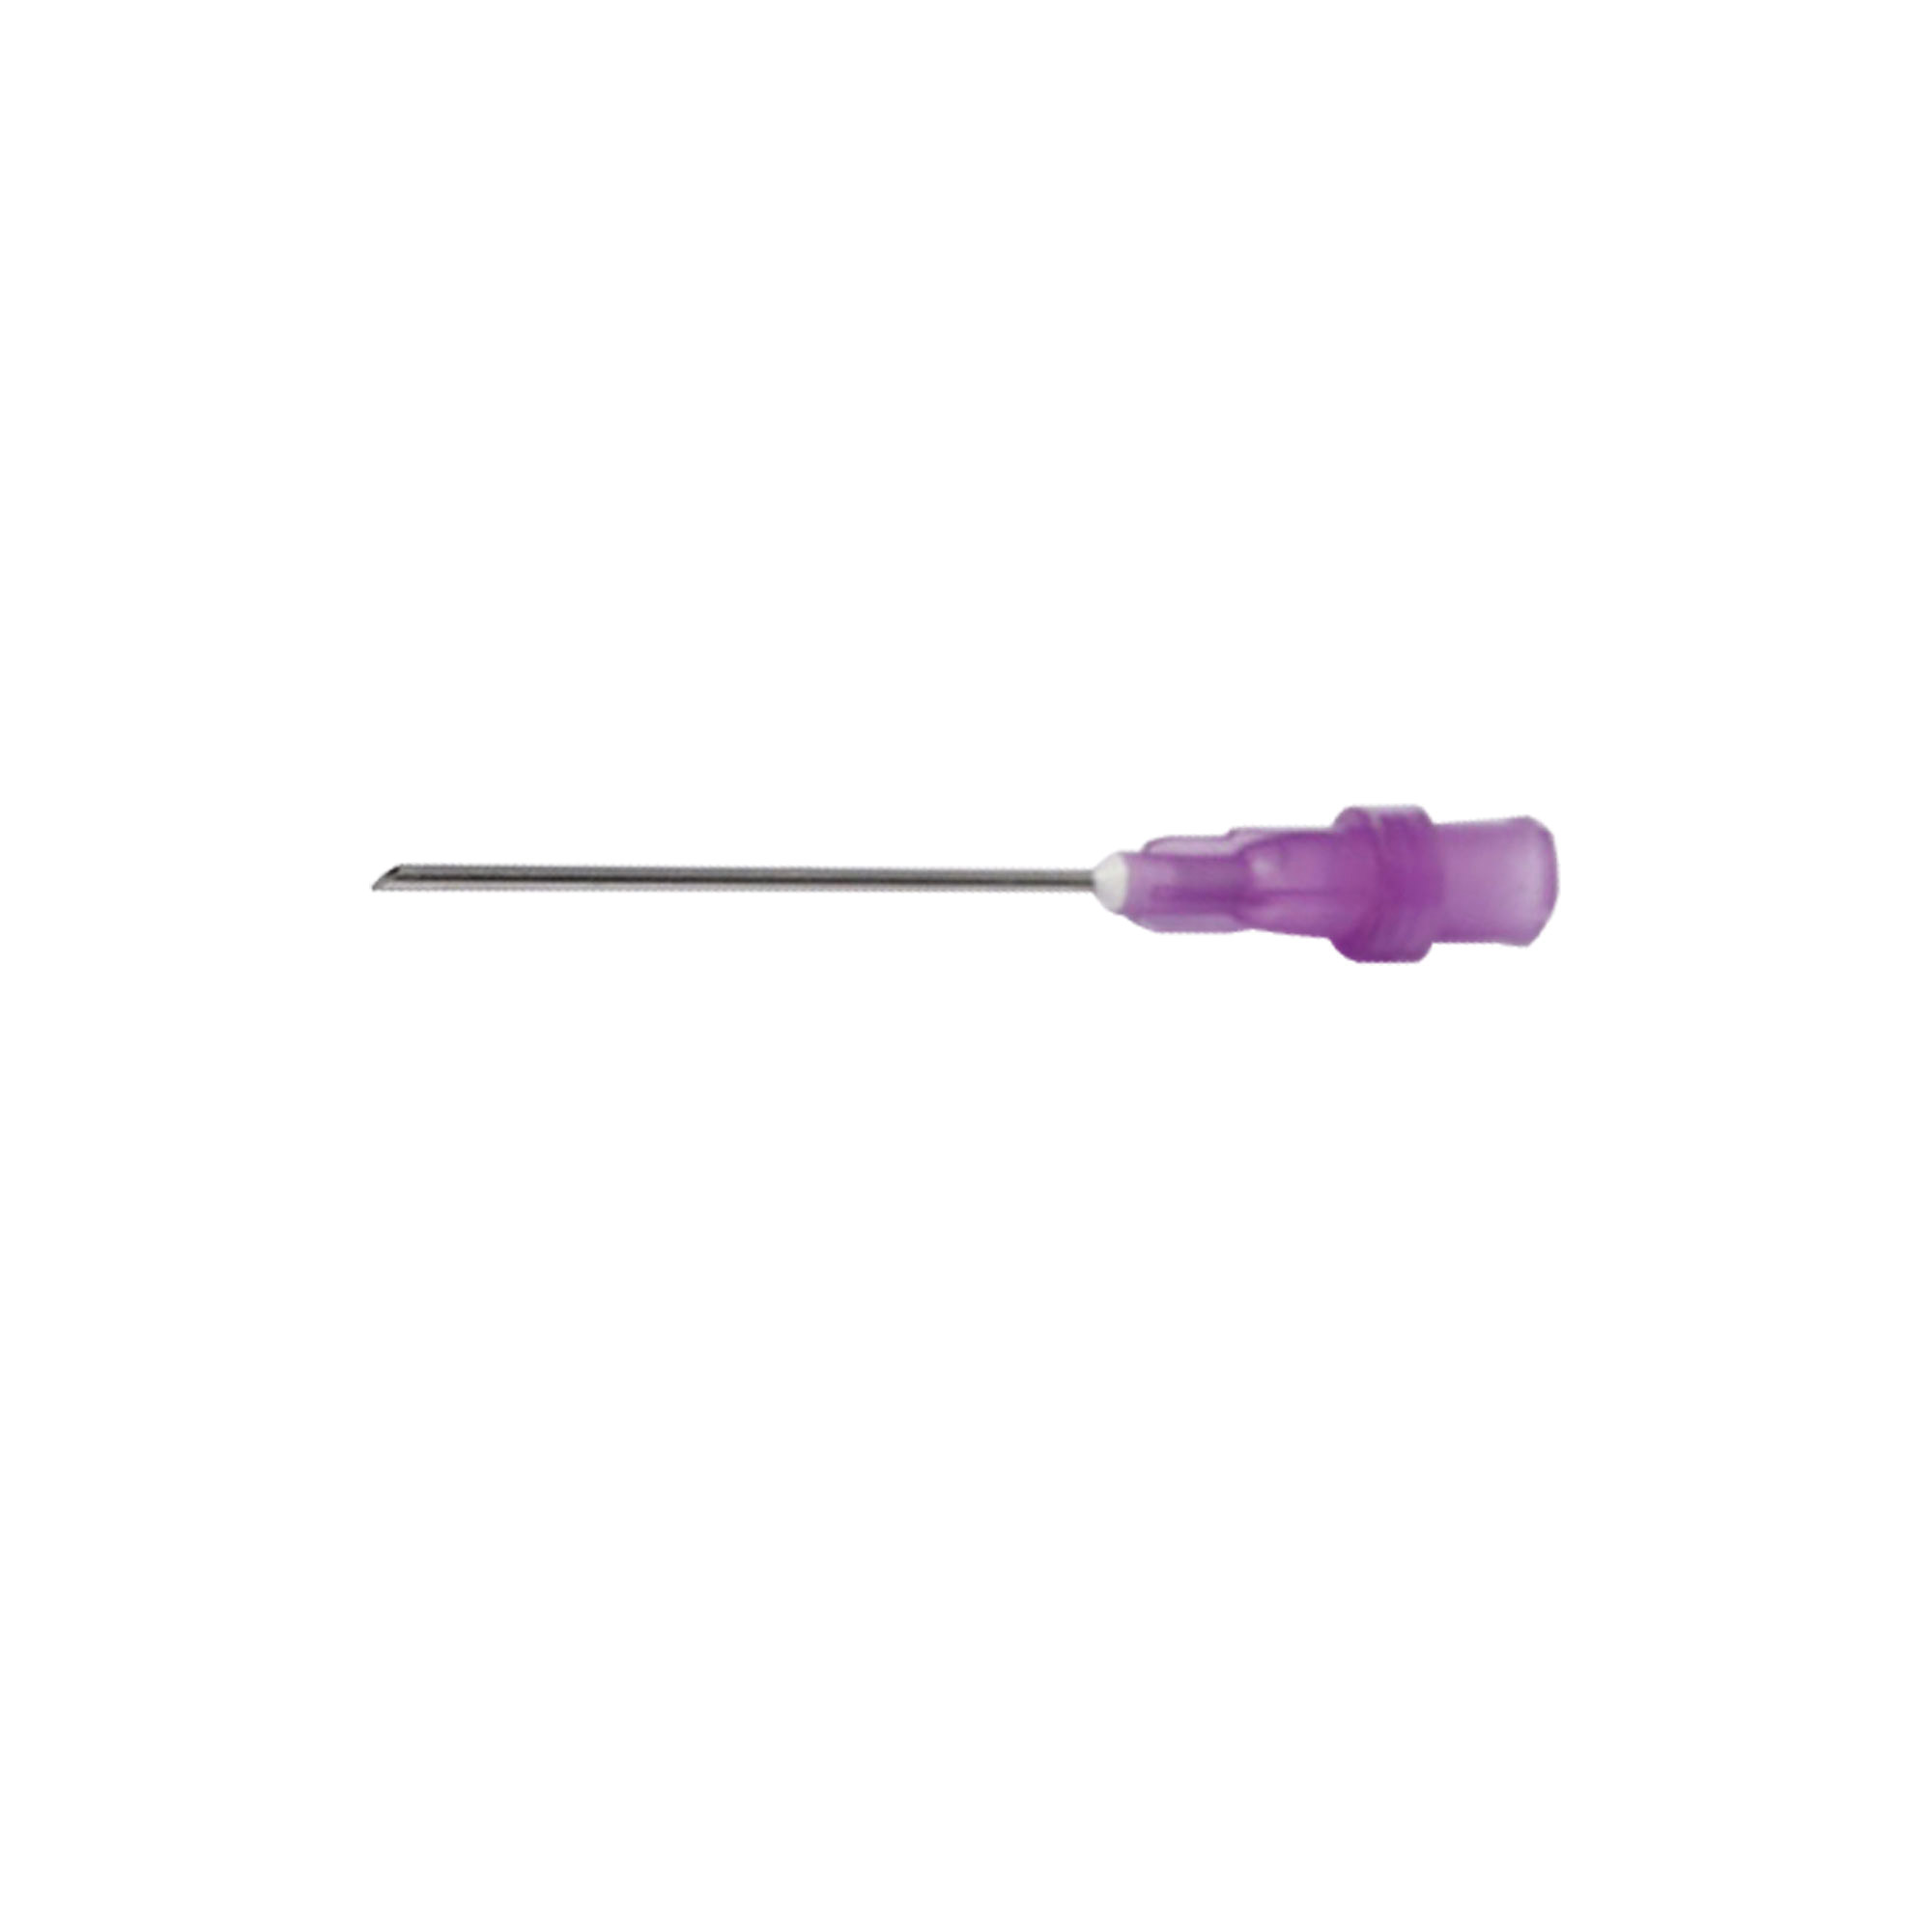 SOL - CARE Blunt Fill Needle 18gx1 1/2